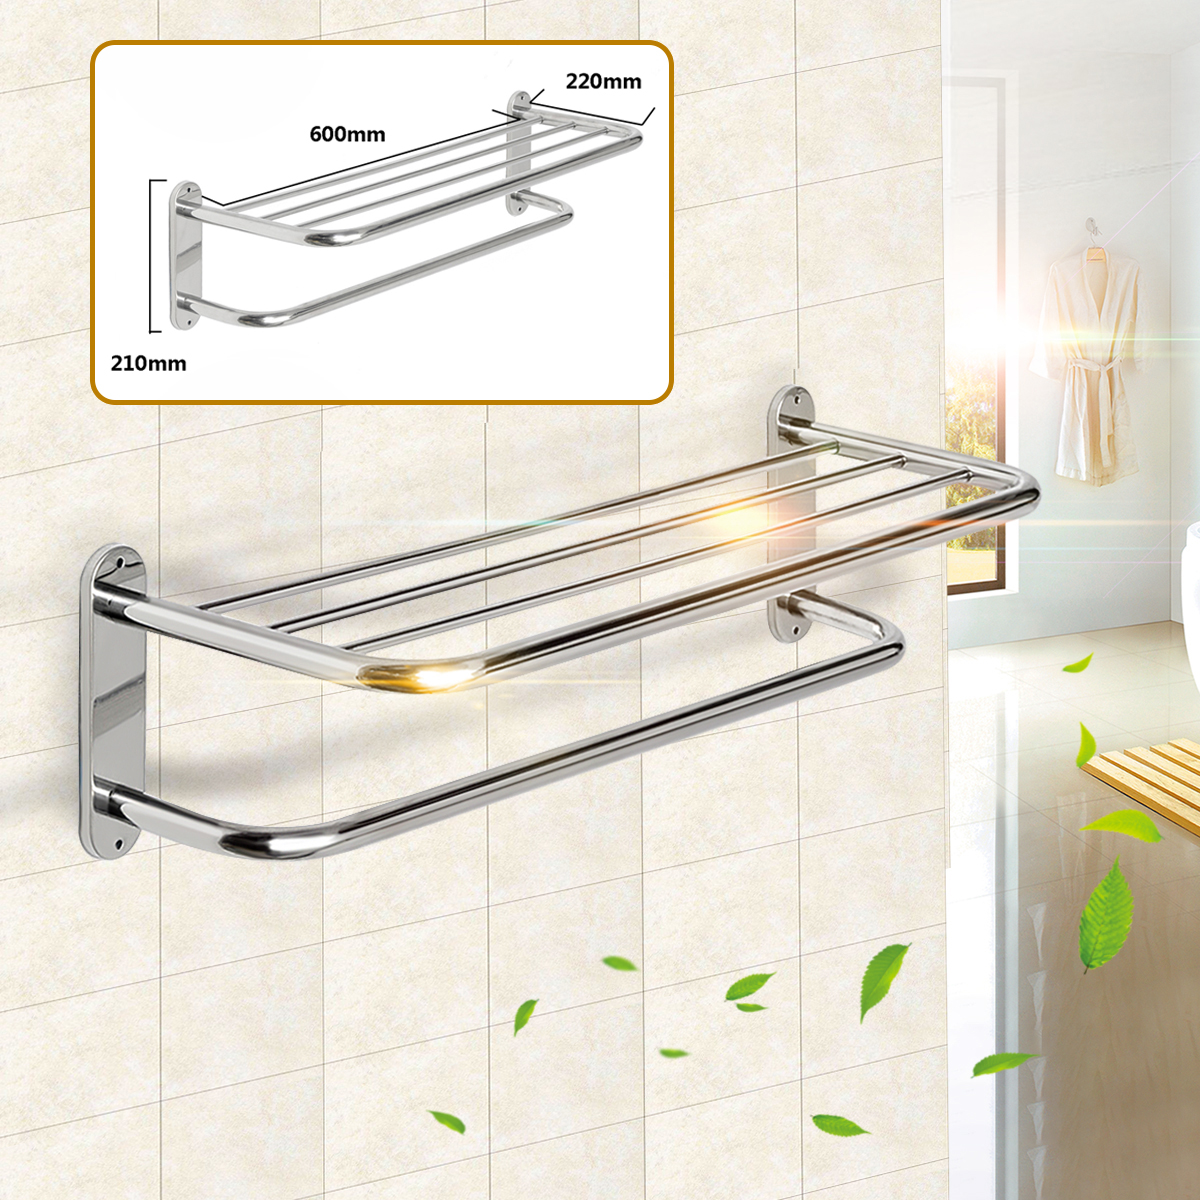 Chrome-Stylish-Bathroom-Wall-Mounted-Towel-Rail-Holder-Shelf-Storage-Rack-1258253-1